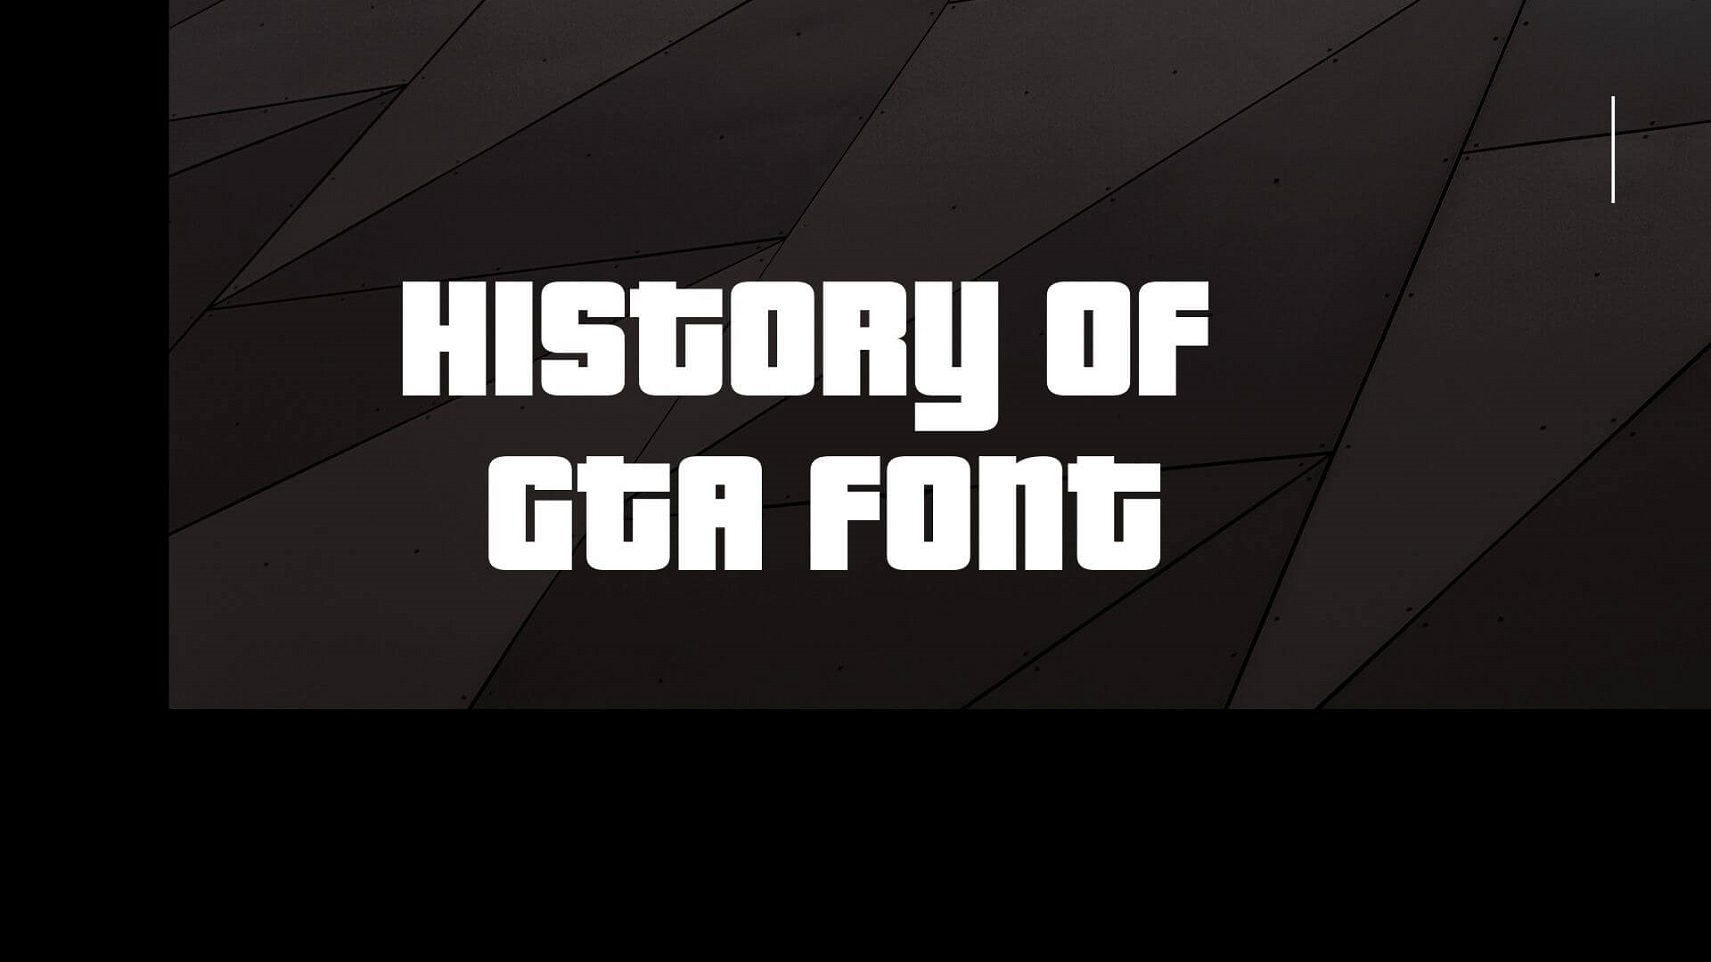 History of GTA Font